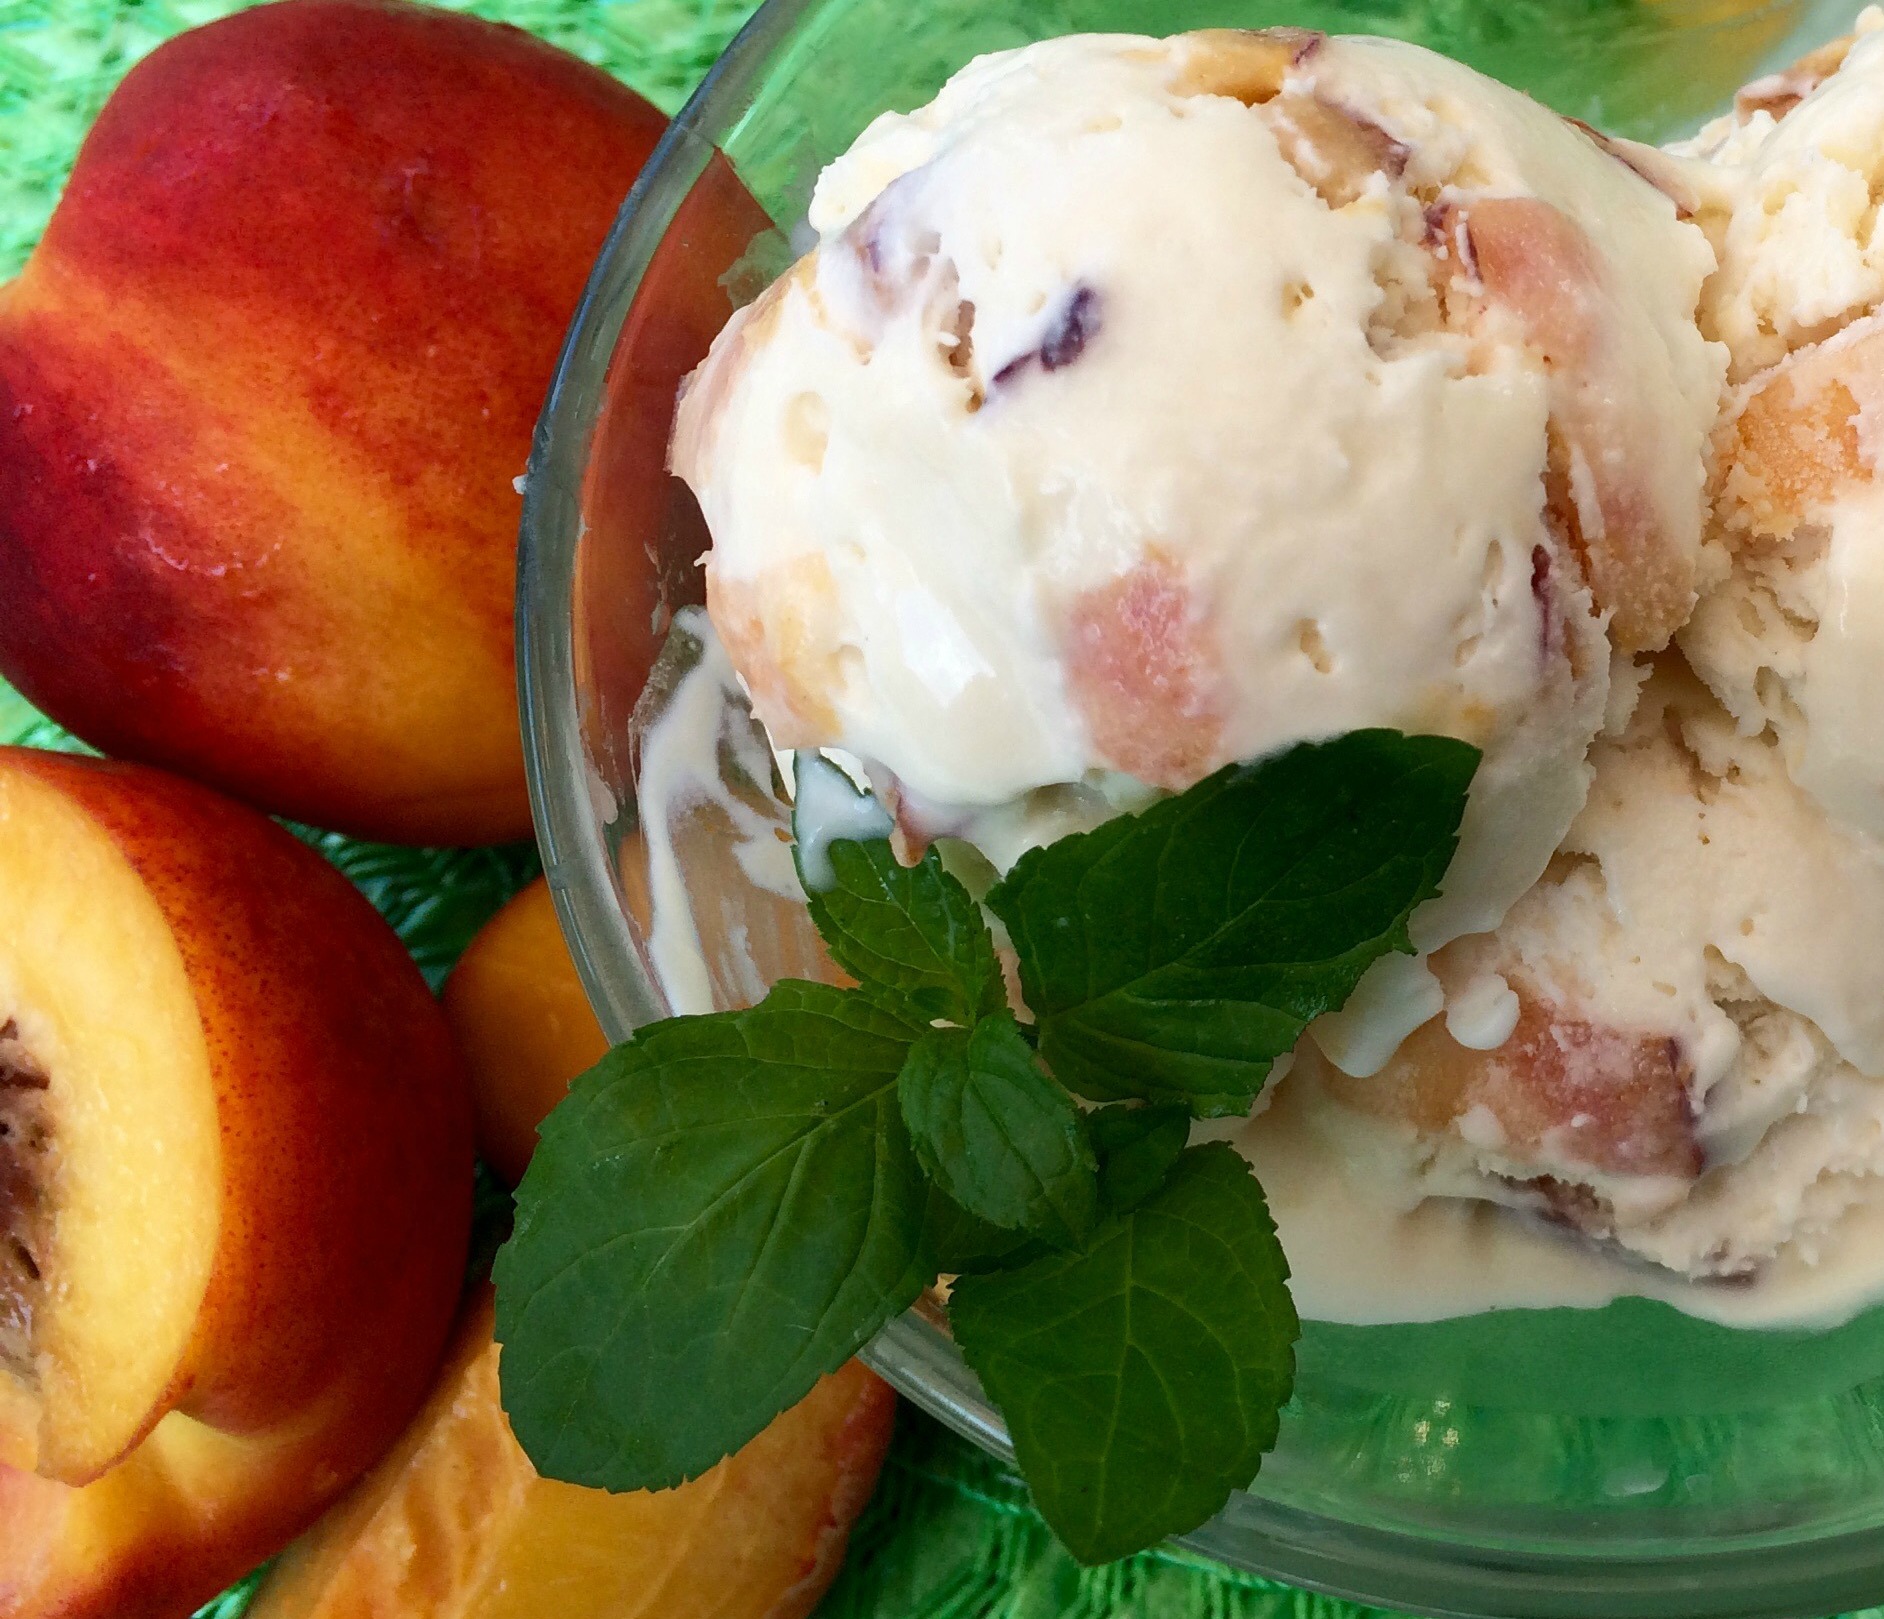 Peach Ice Cream with fresh peaches and mint sprig